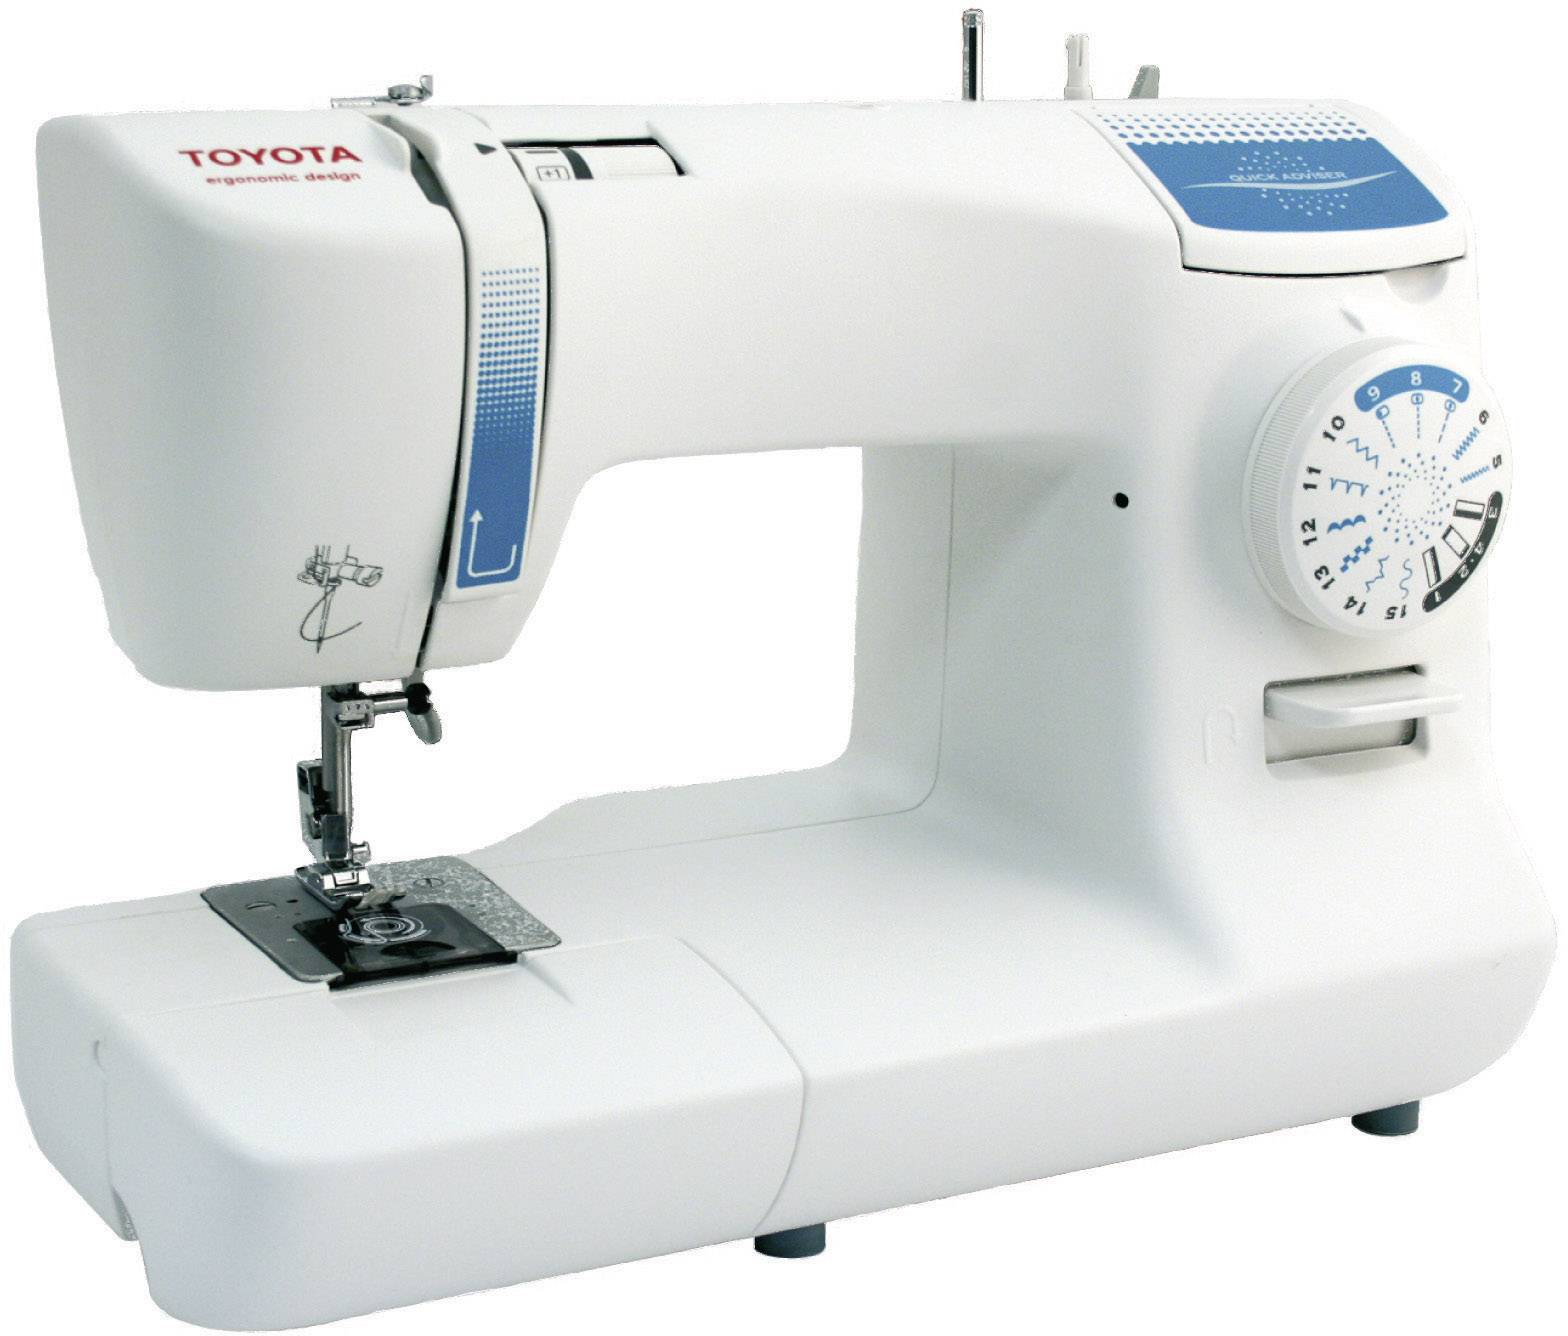 Toyota Sewing Machines SPB15 White, Blue | Conrad.com